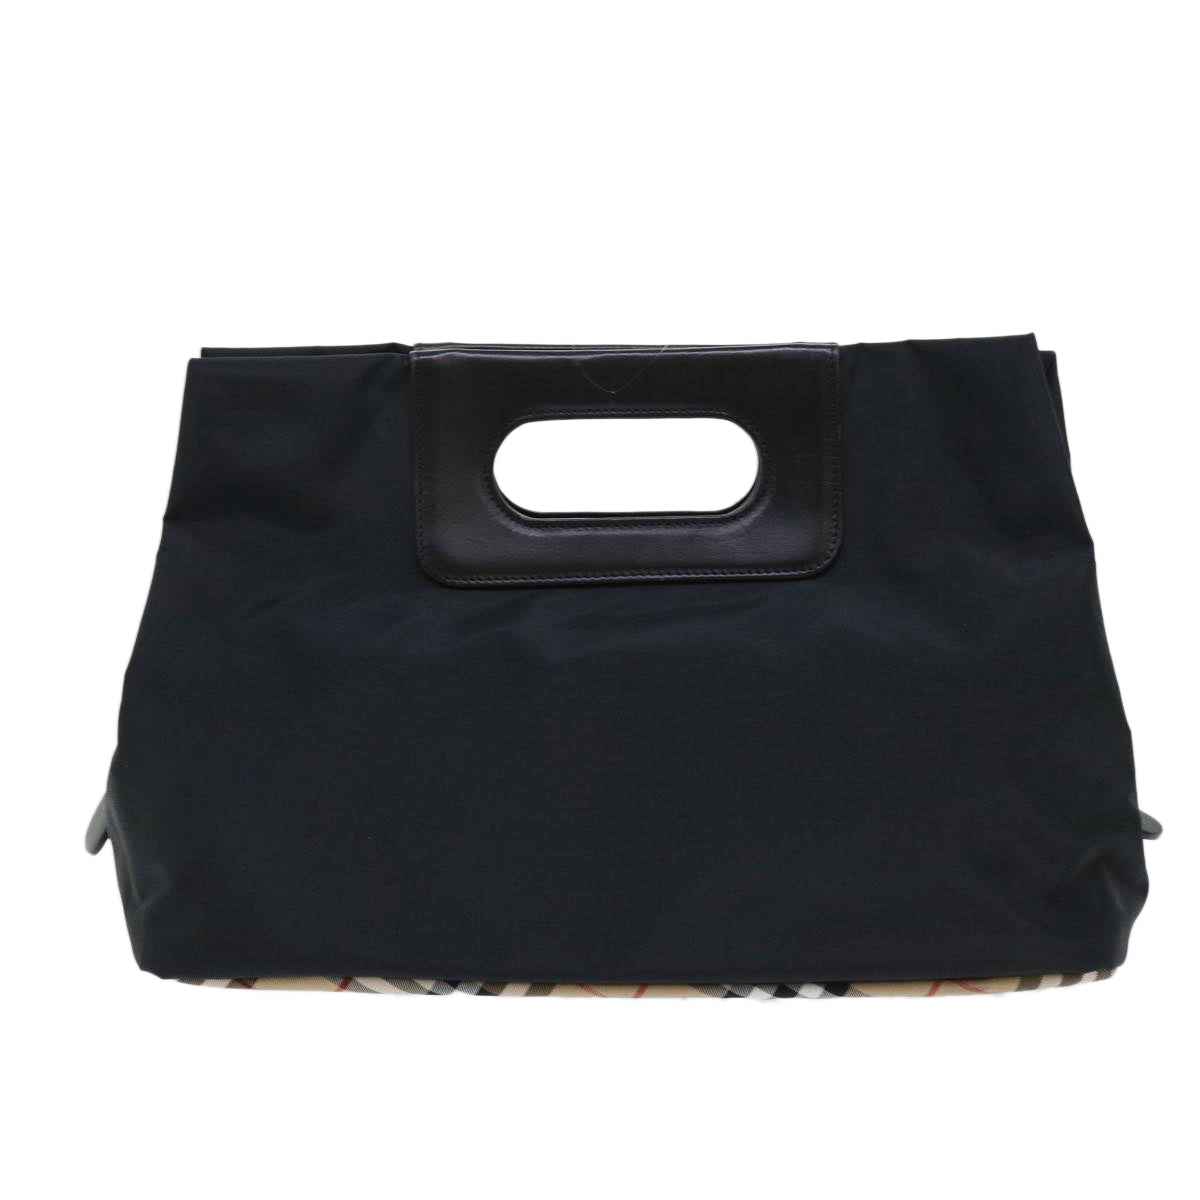 Burberrys Nova Check Blue Label Hand Bag Nylon Black Beige Auth hk826 - 0